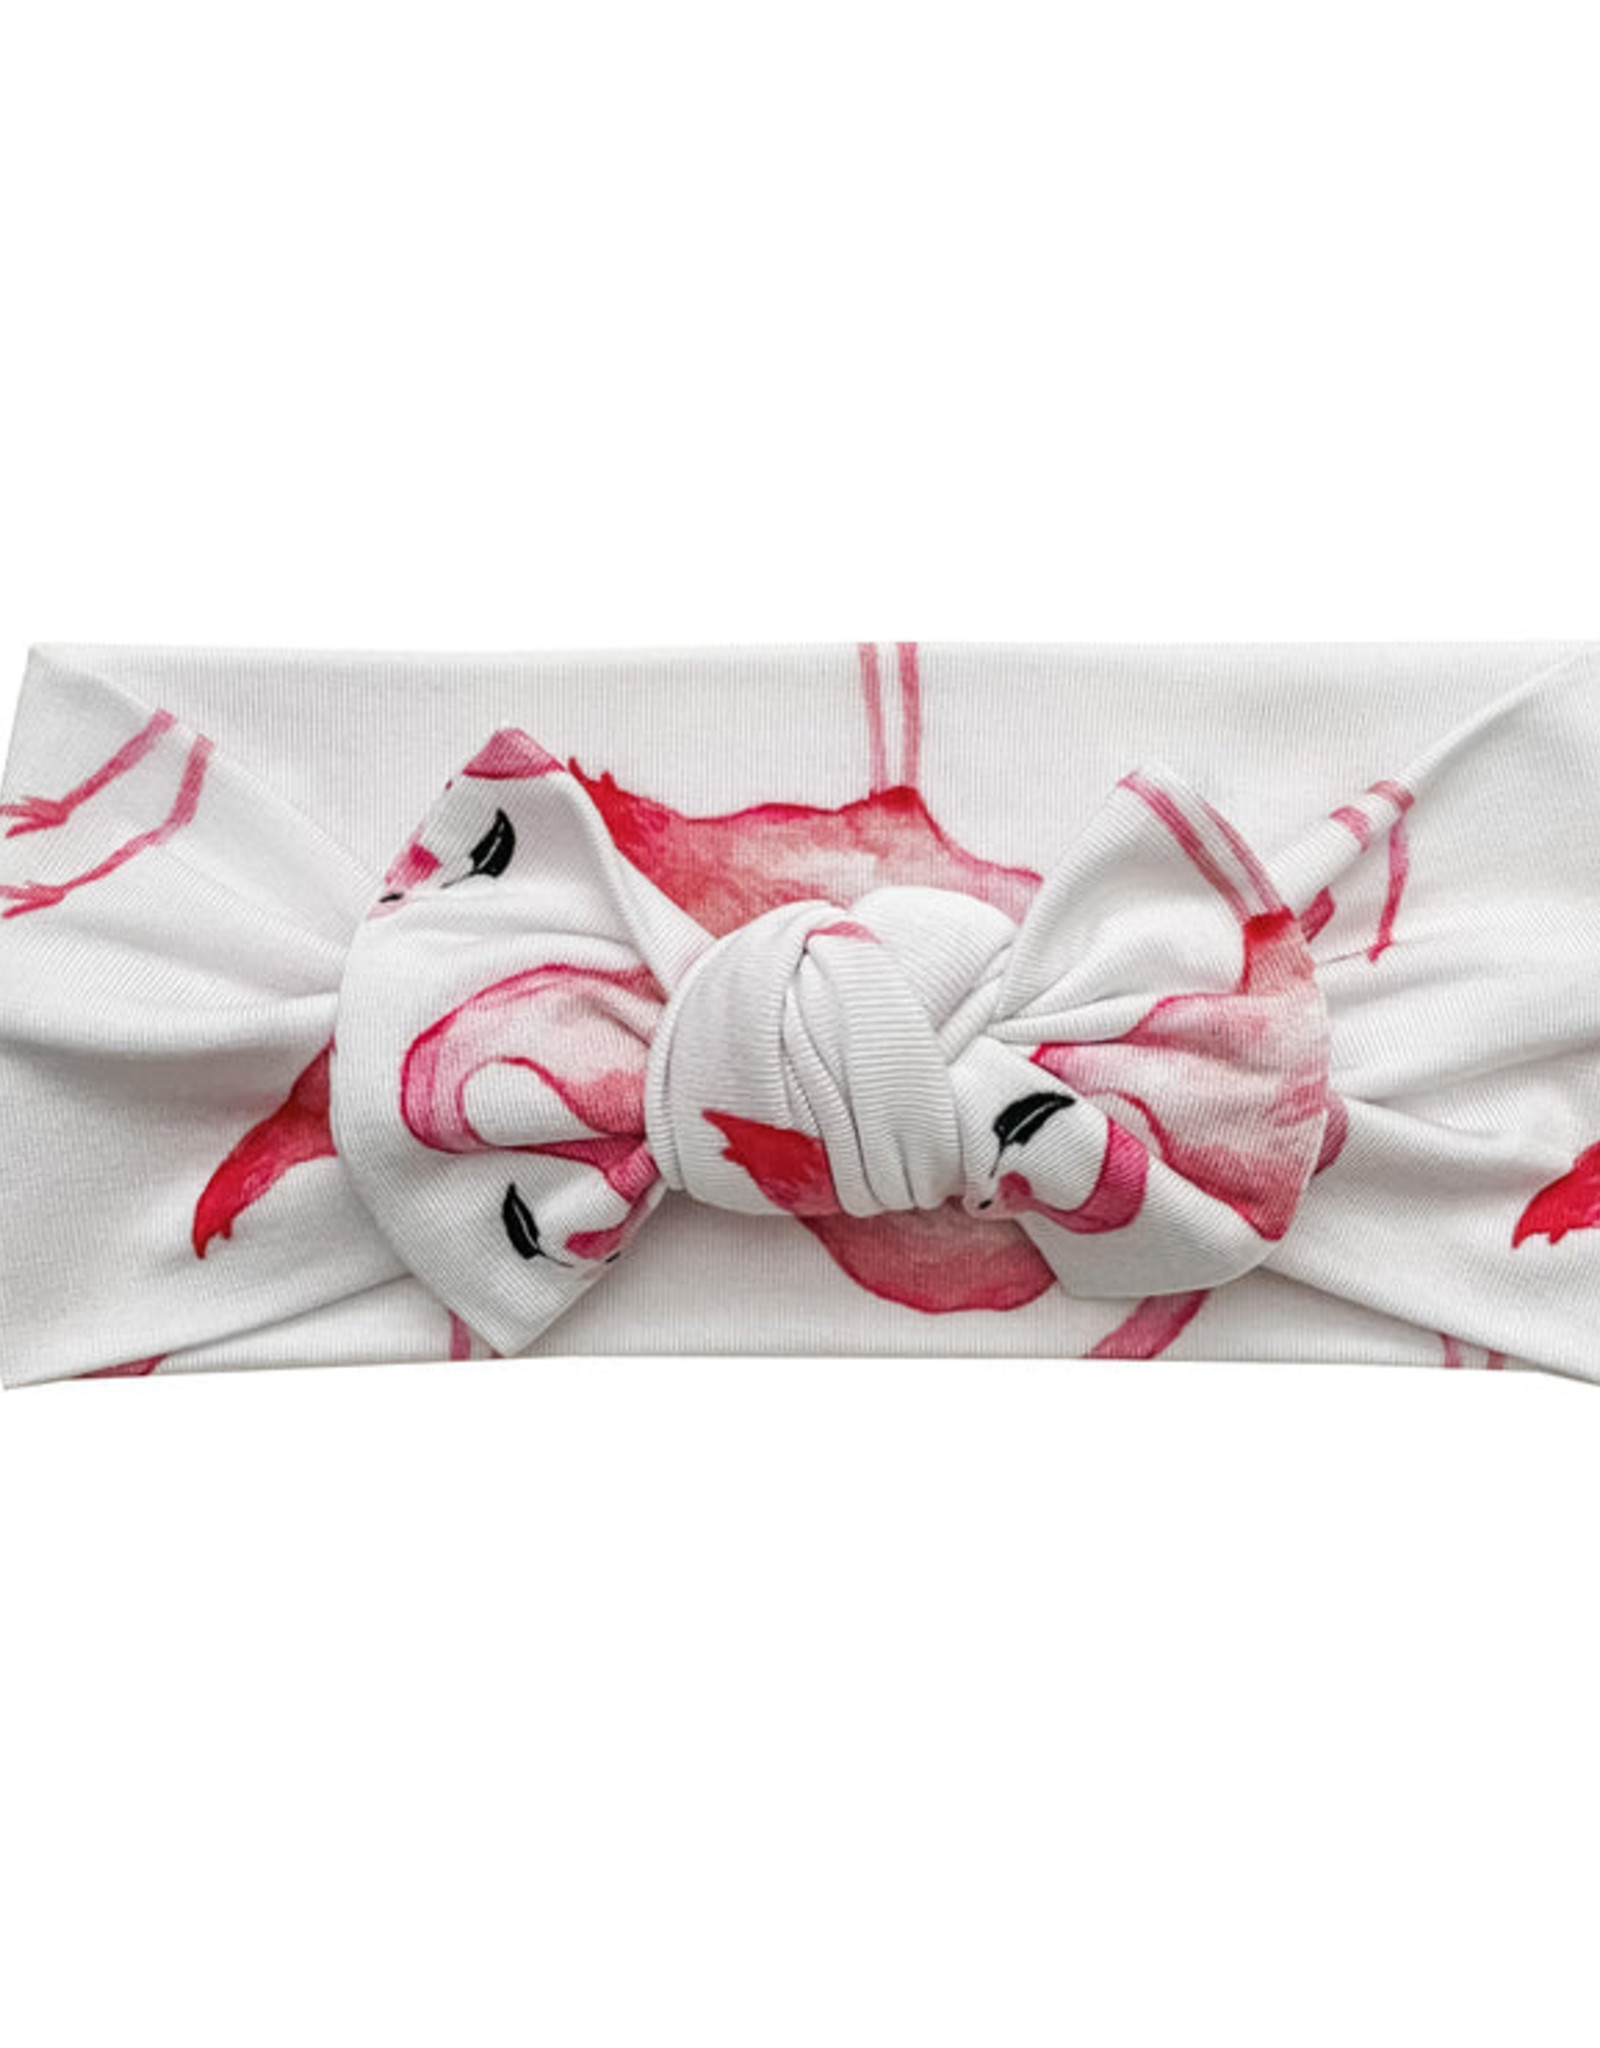 Florida Kid Co. Flamingo Knotted Gown & Headband Set Newborn